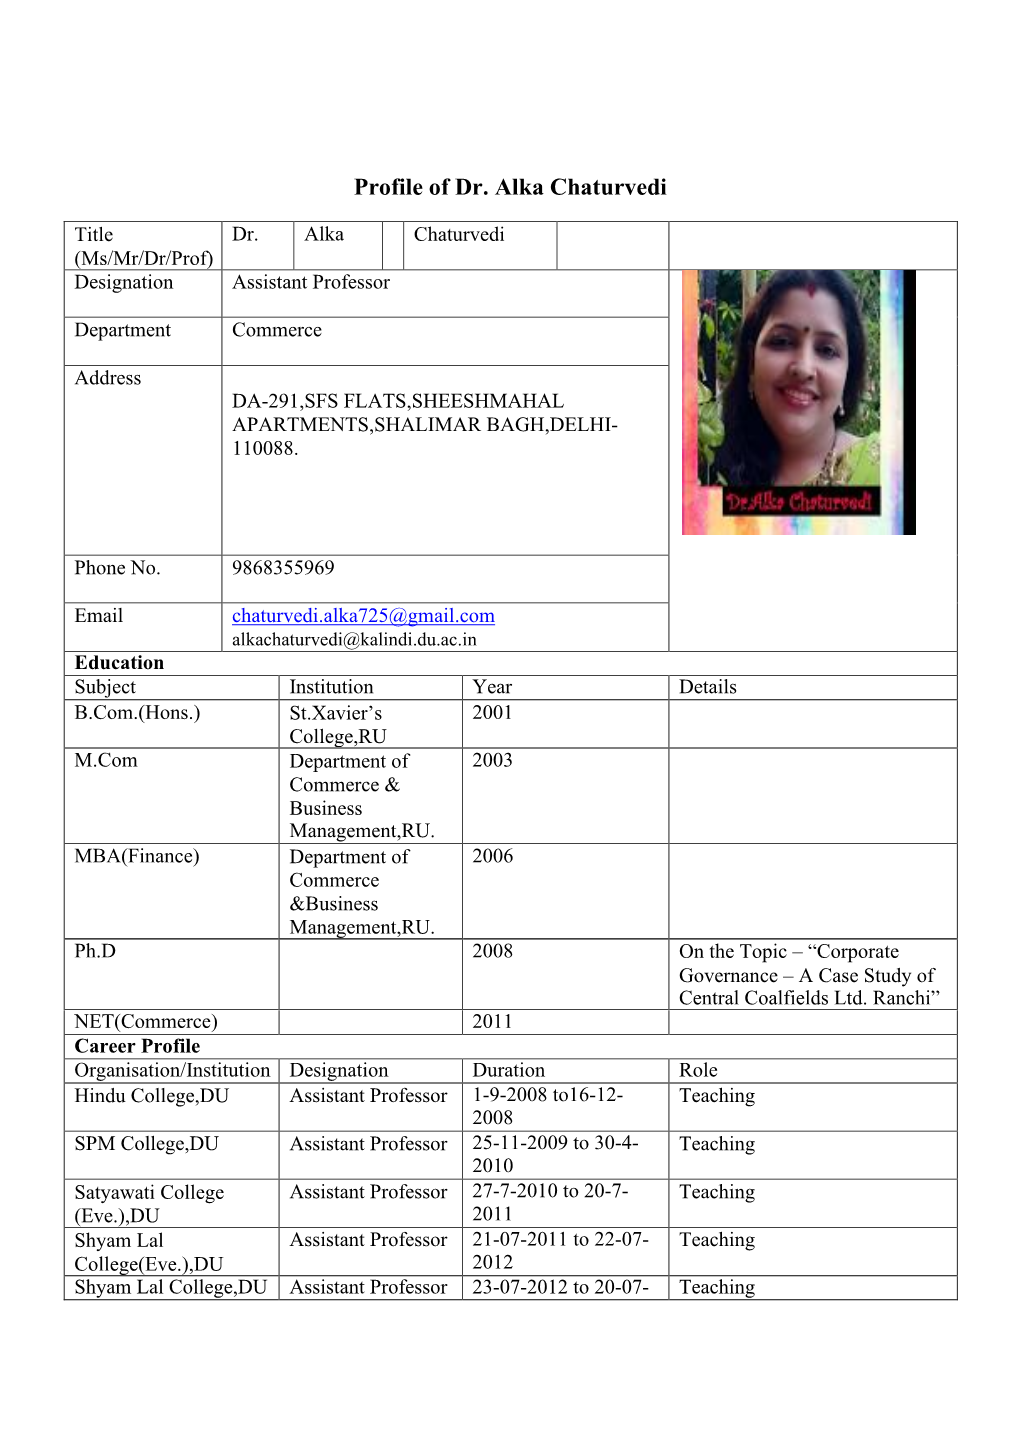 Profile of Dr. Alka Chaturvedi